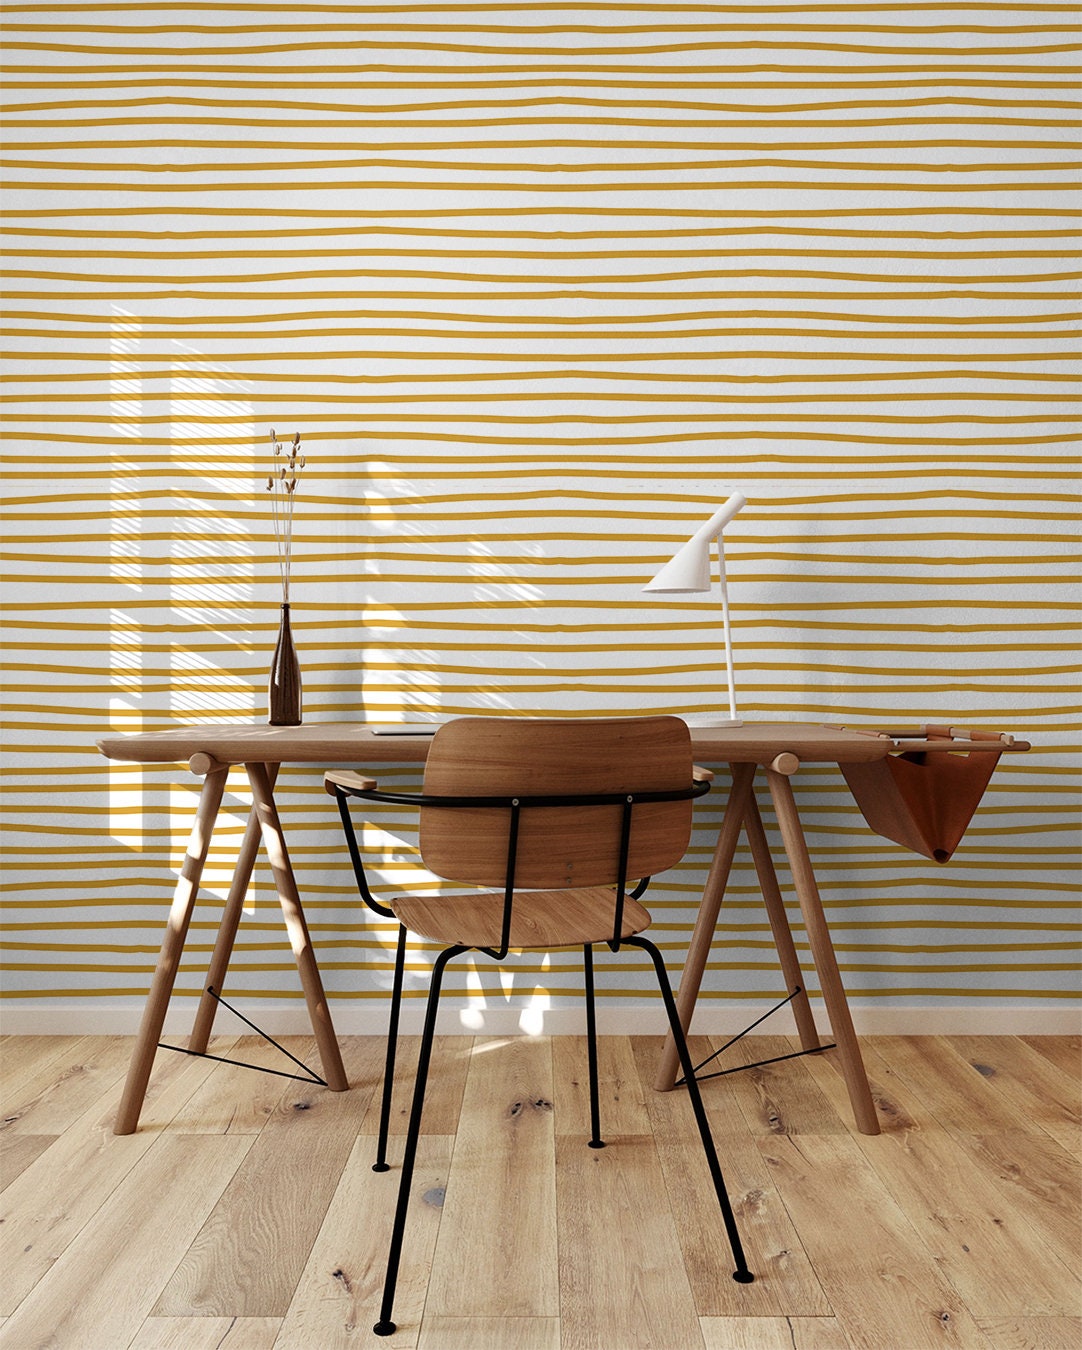 Gold Drawn Line Wallpaper | Removable Wallpaper | Peel And Stick Wallpaper | Adhesive Wallpaper | Wall Paper Peel And Stick Wall Mural 2311 - JamesAndColors